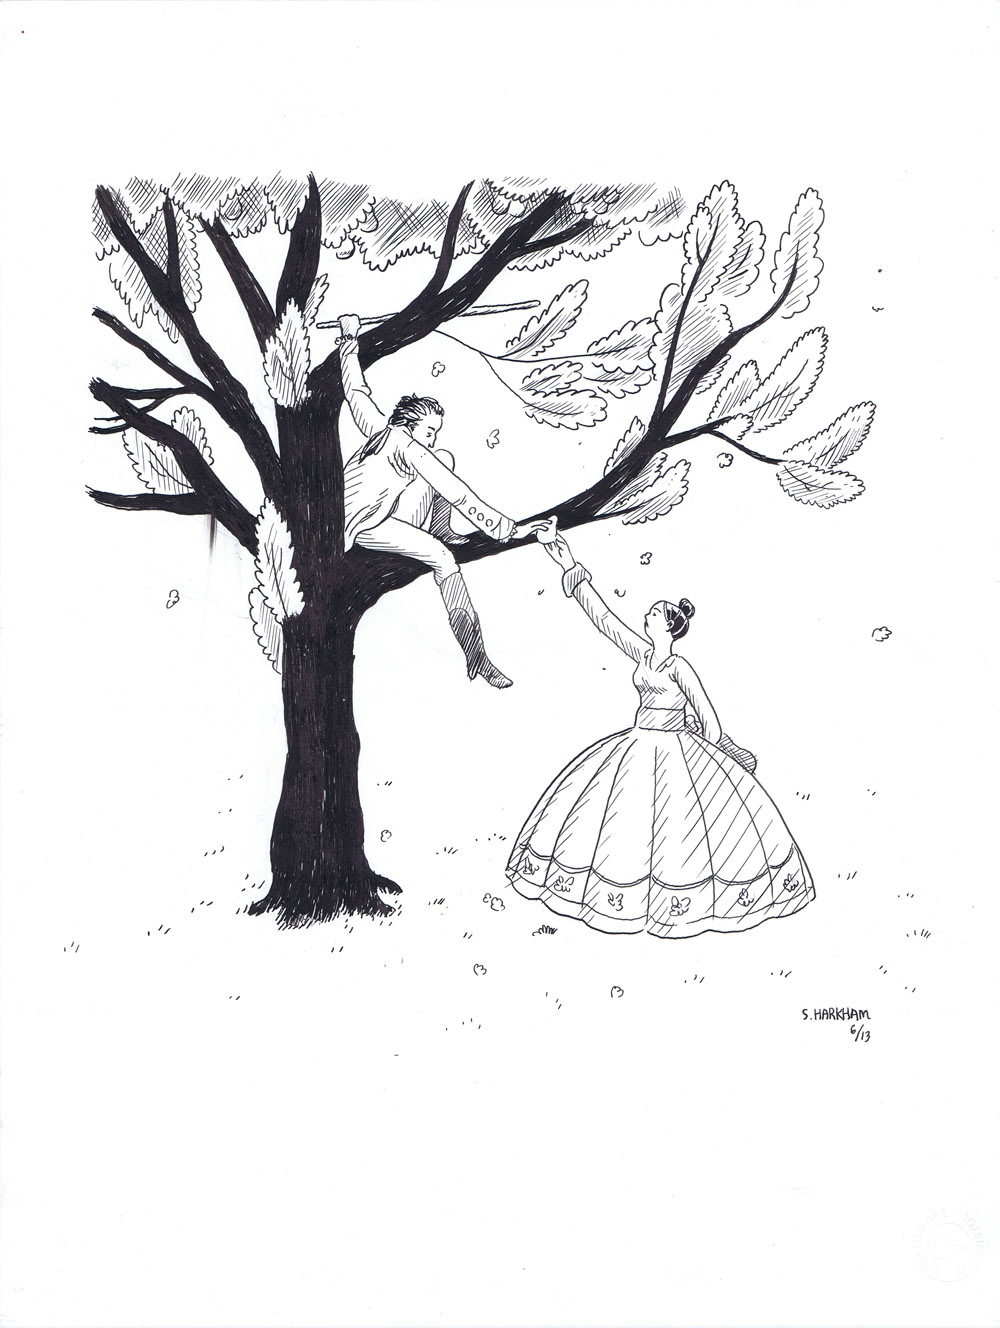 Apology Magazine Illustration - Goethe in the Pear Tree